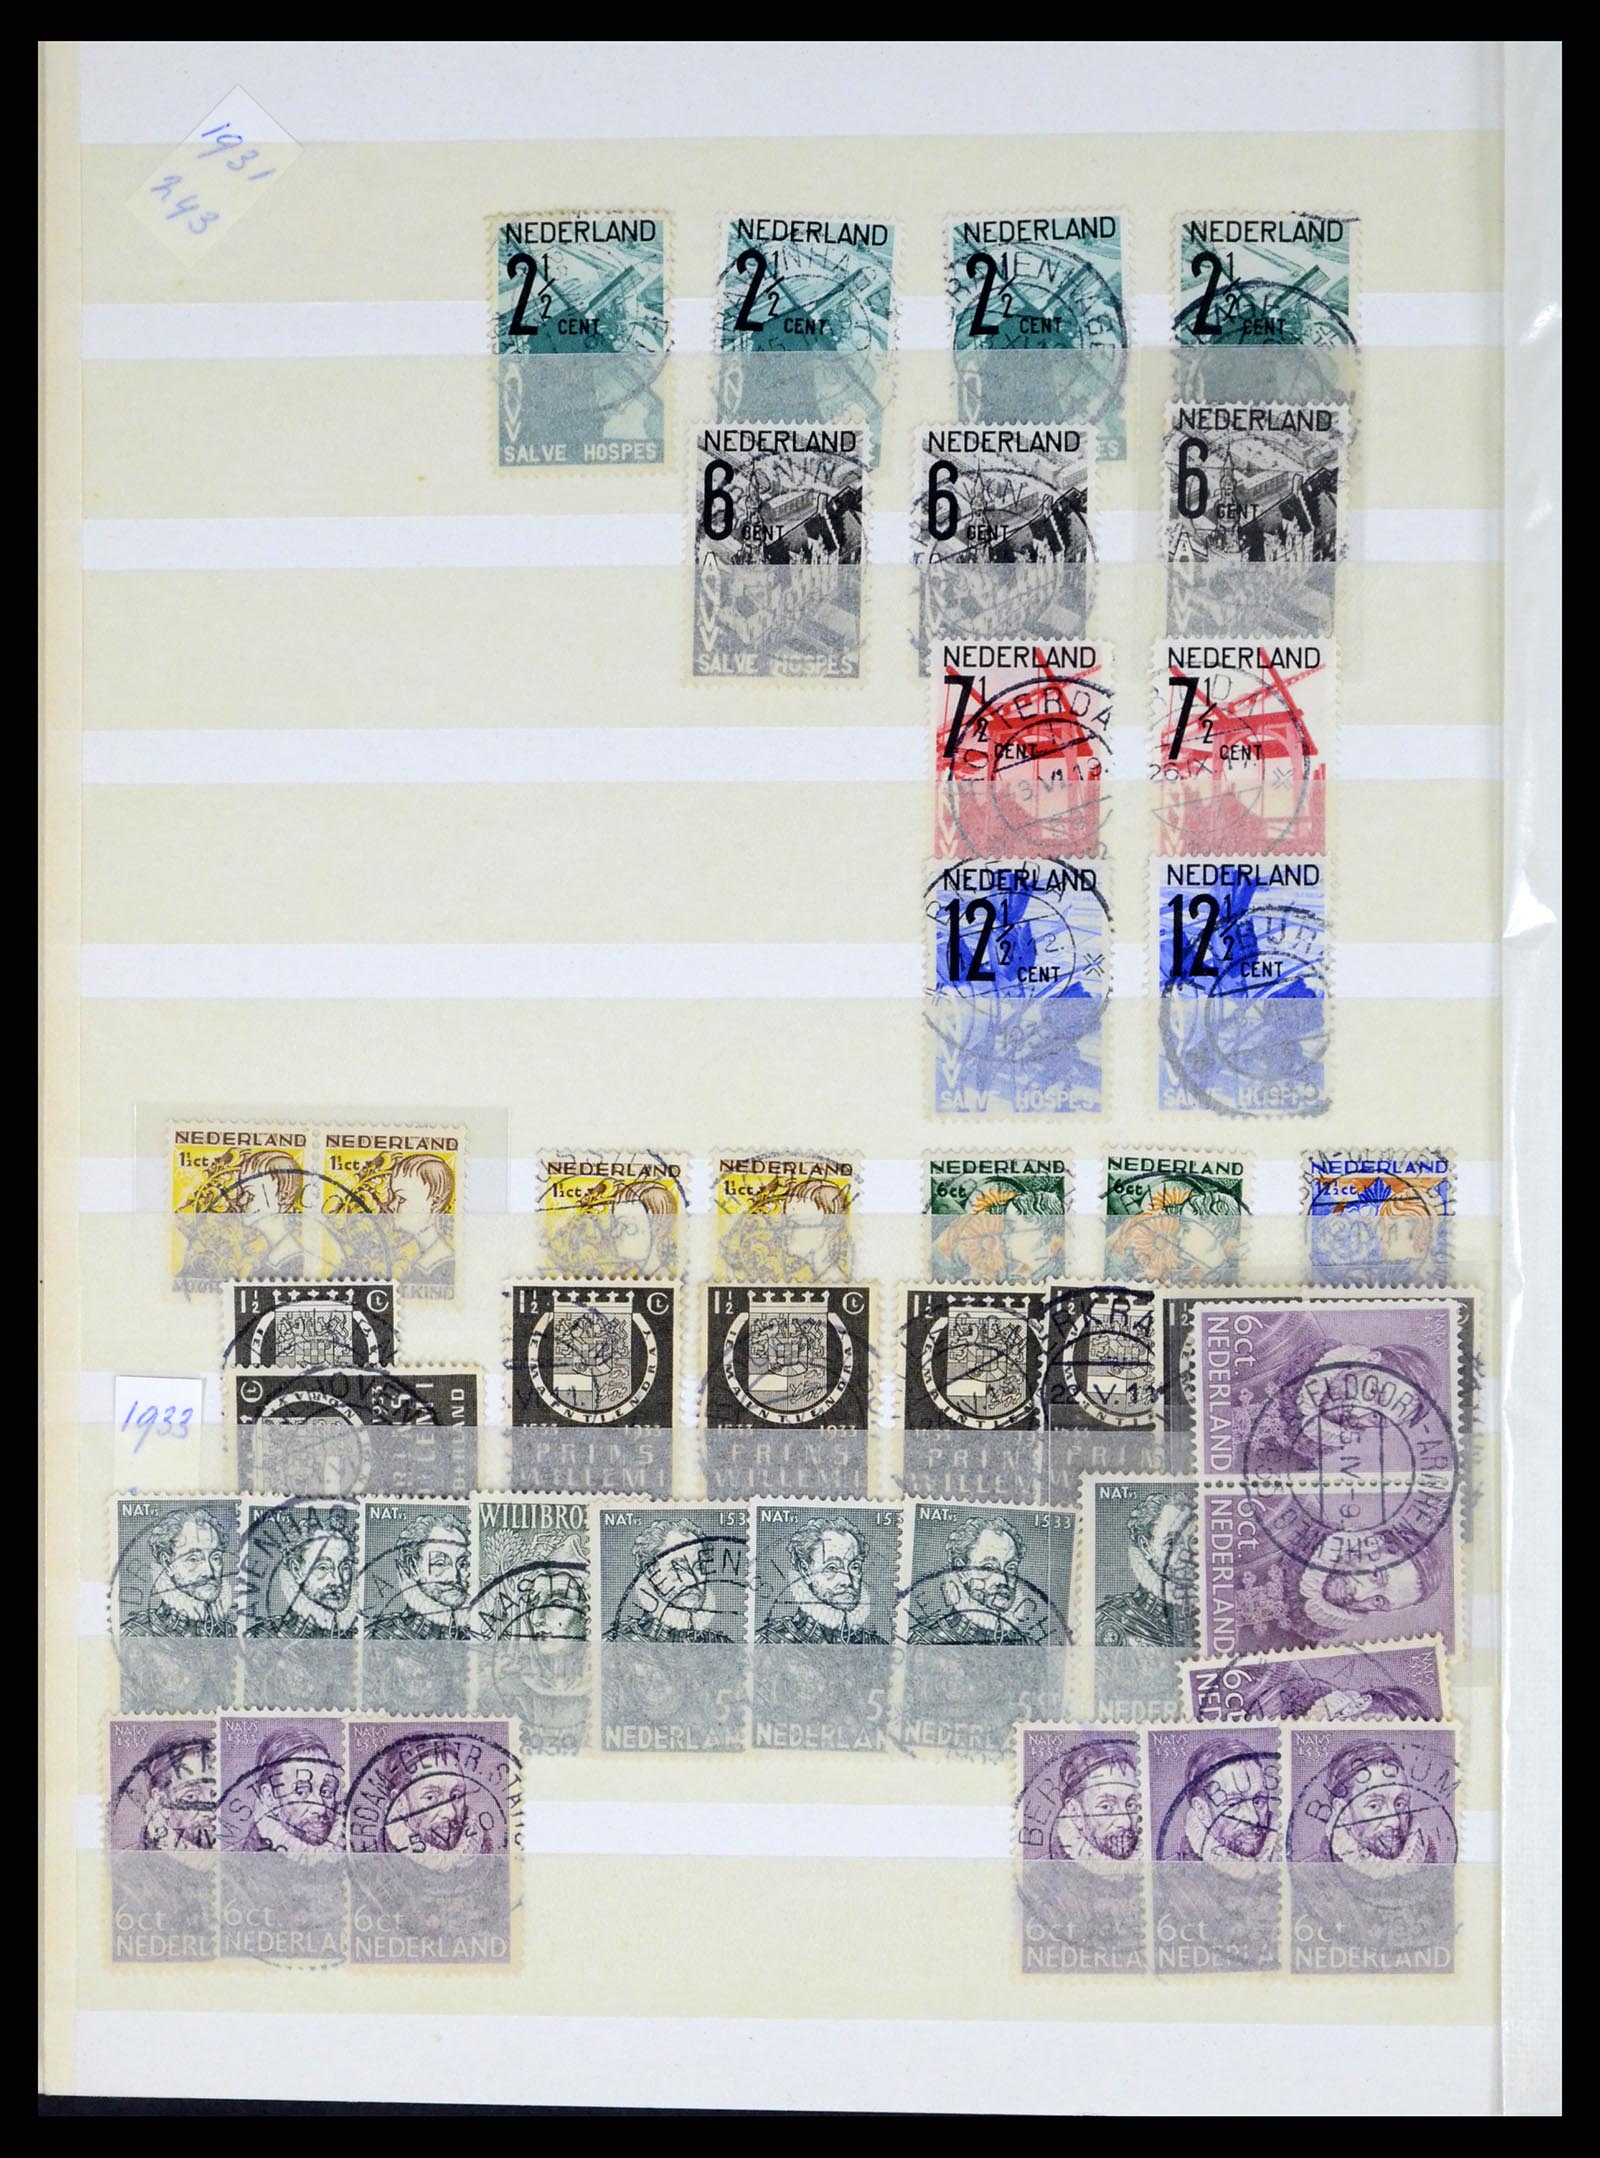 37424 016 - Stamp collection 37424 Netherlands shortbar cancels.